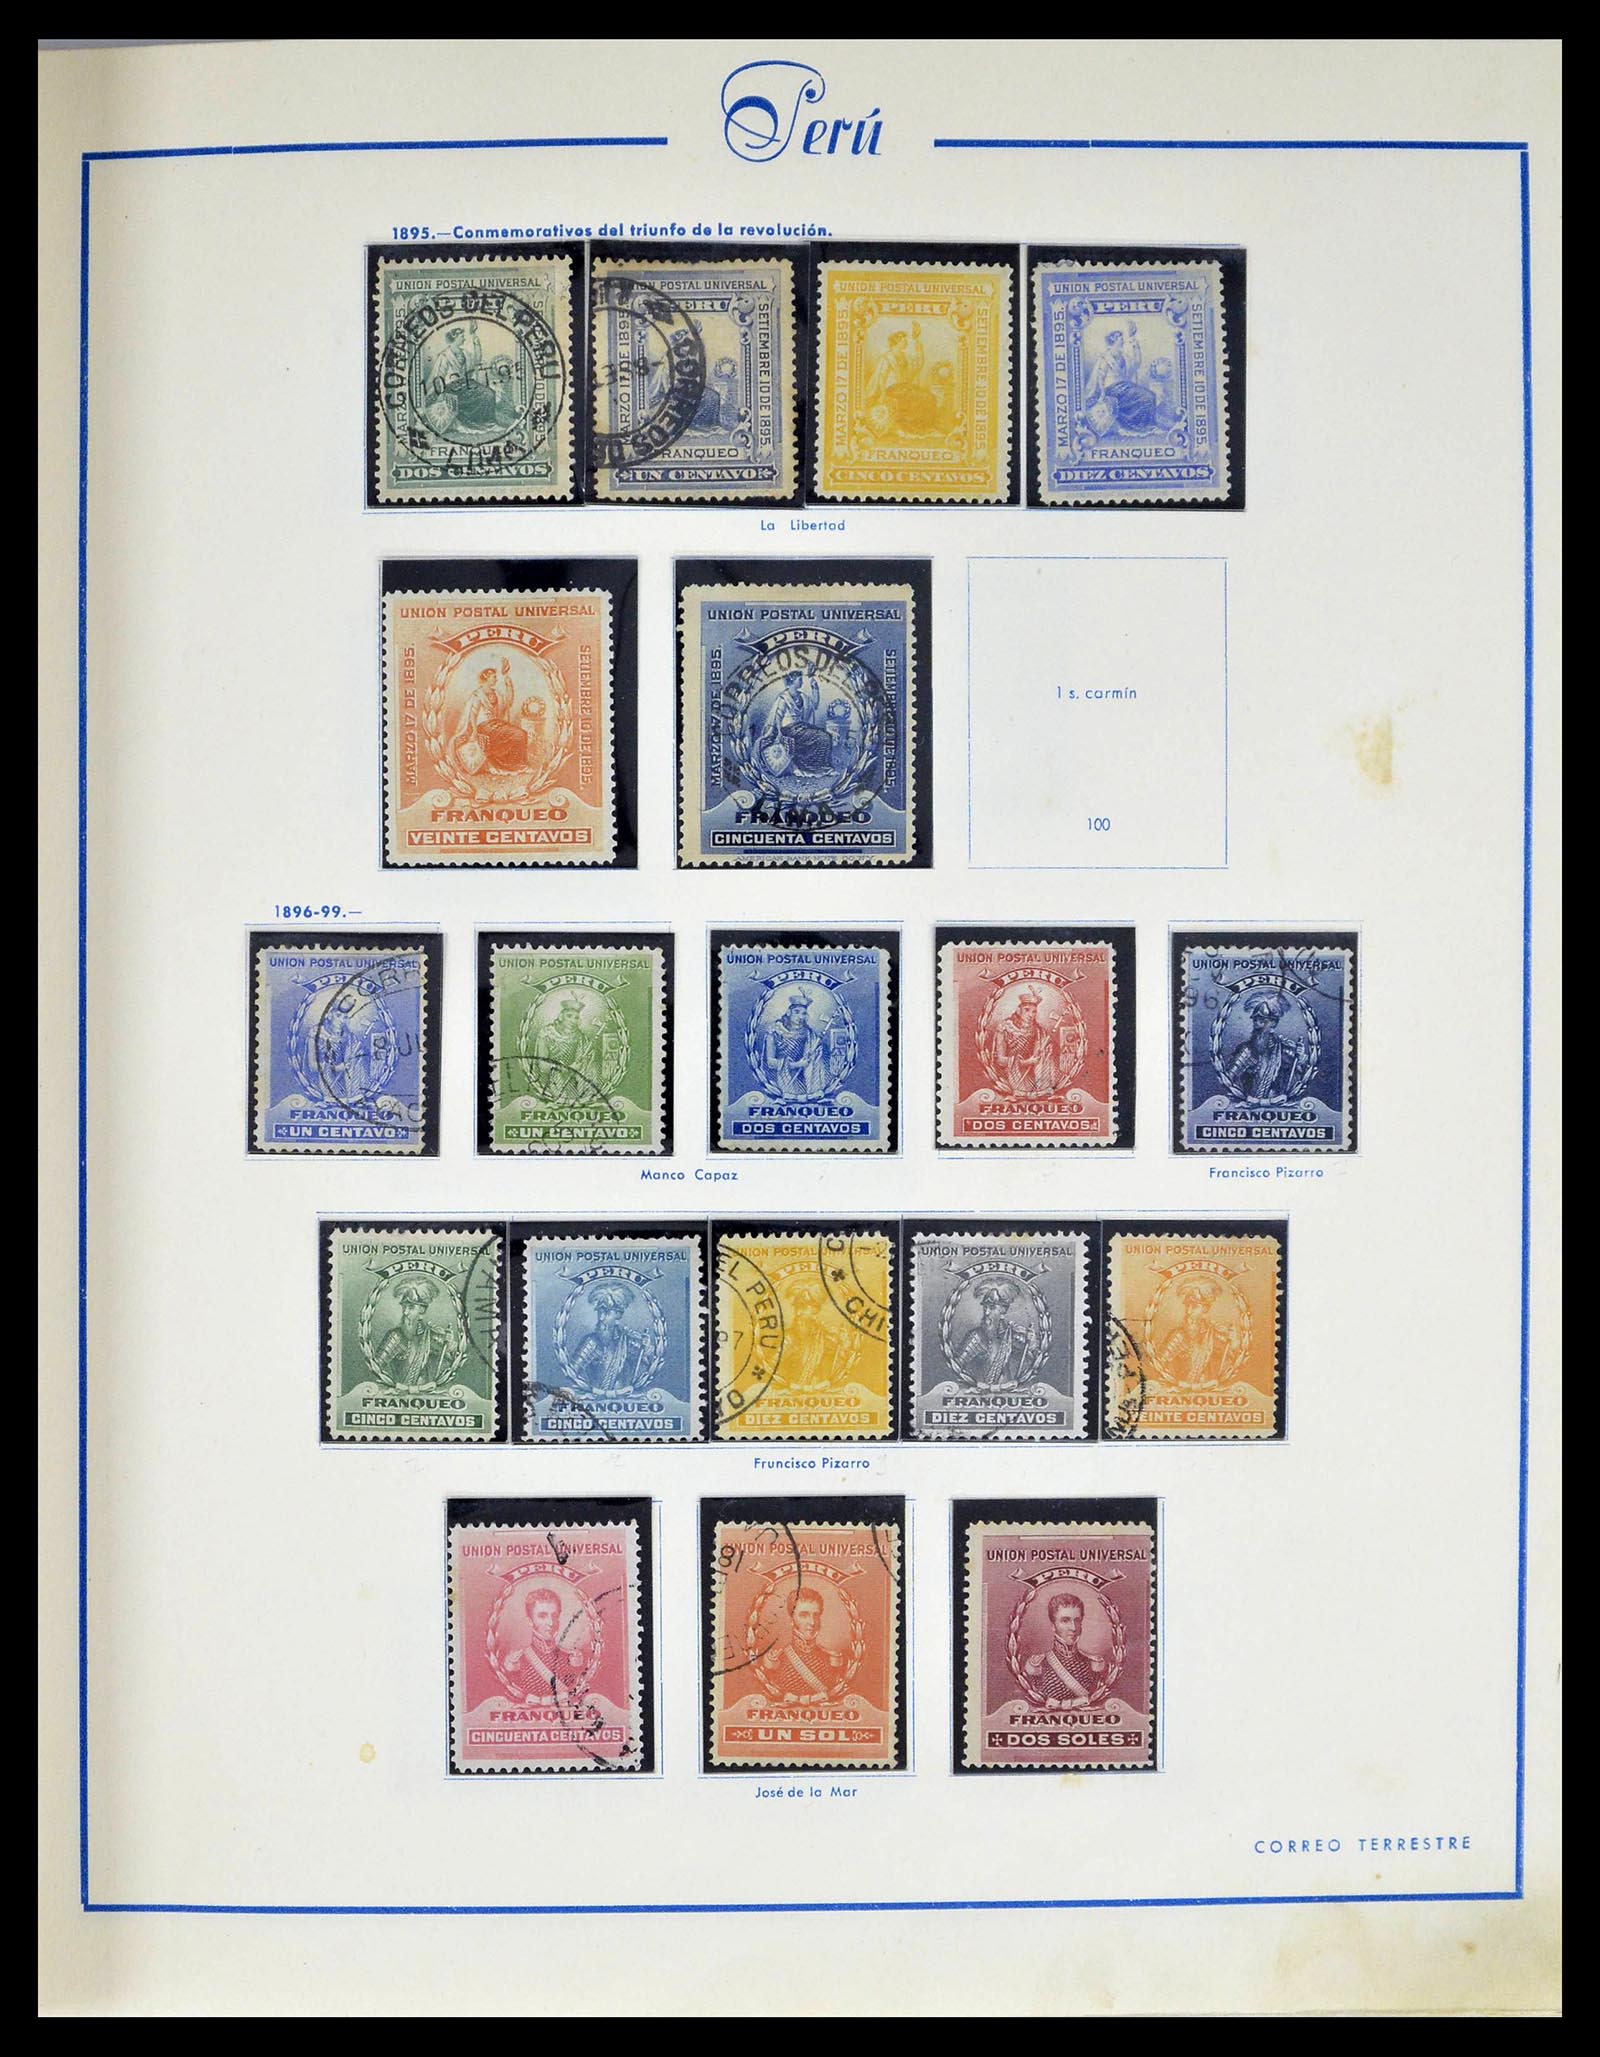 39214 0006 - Stamp collection 39214 Peru 1857-1981.